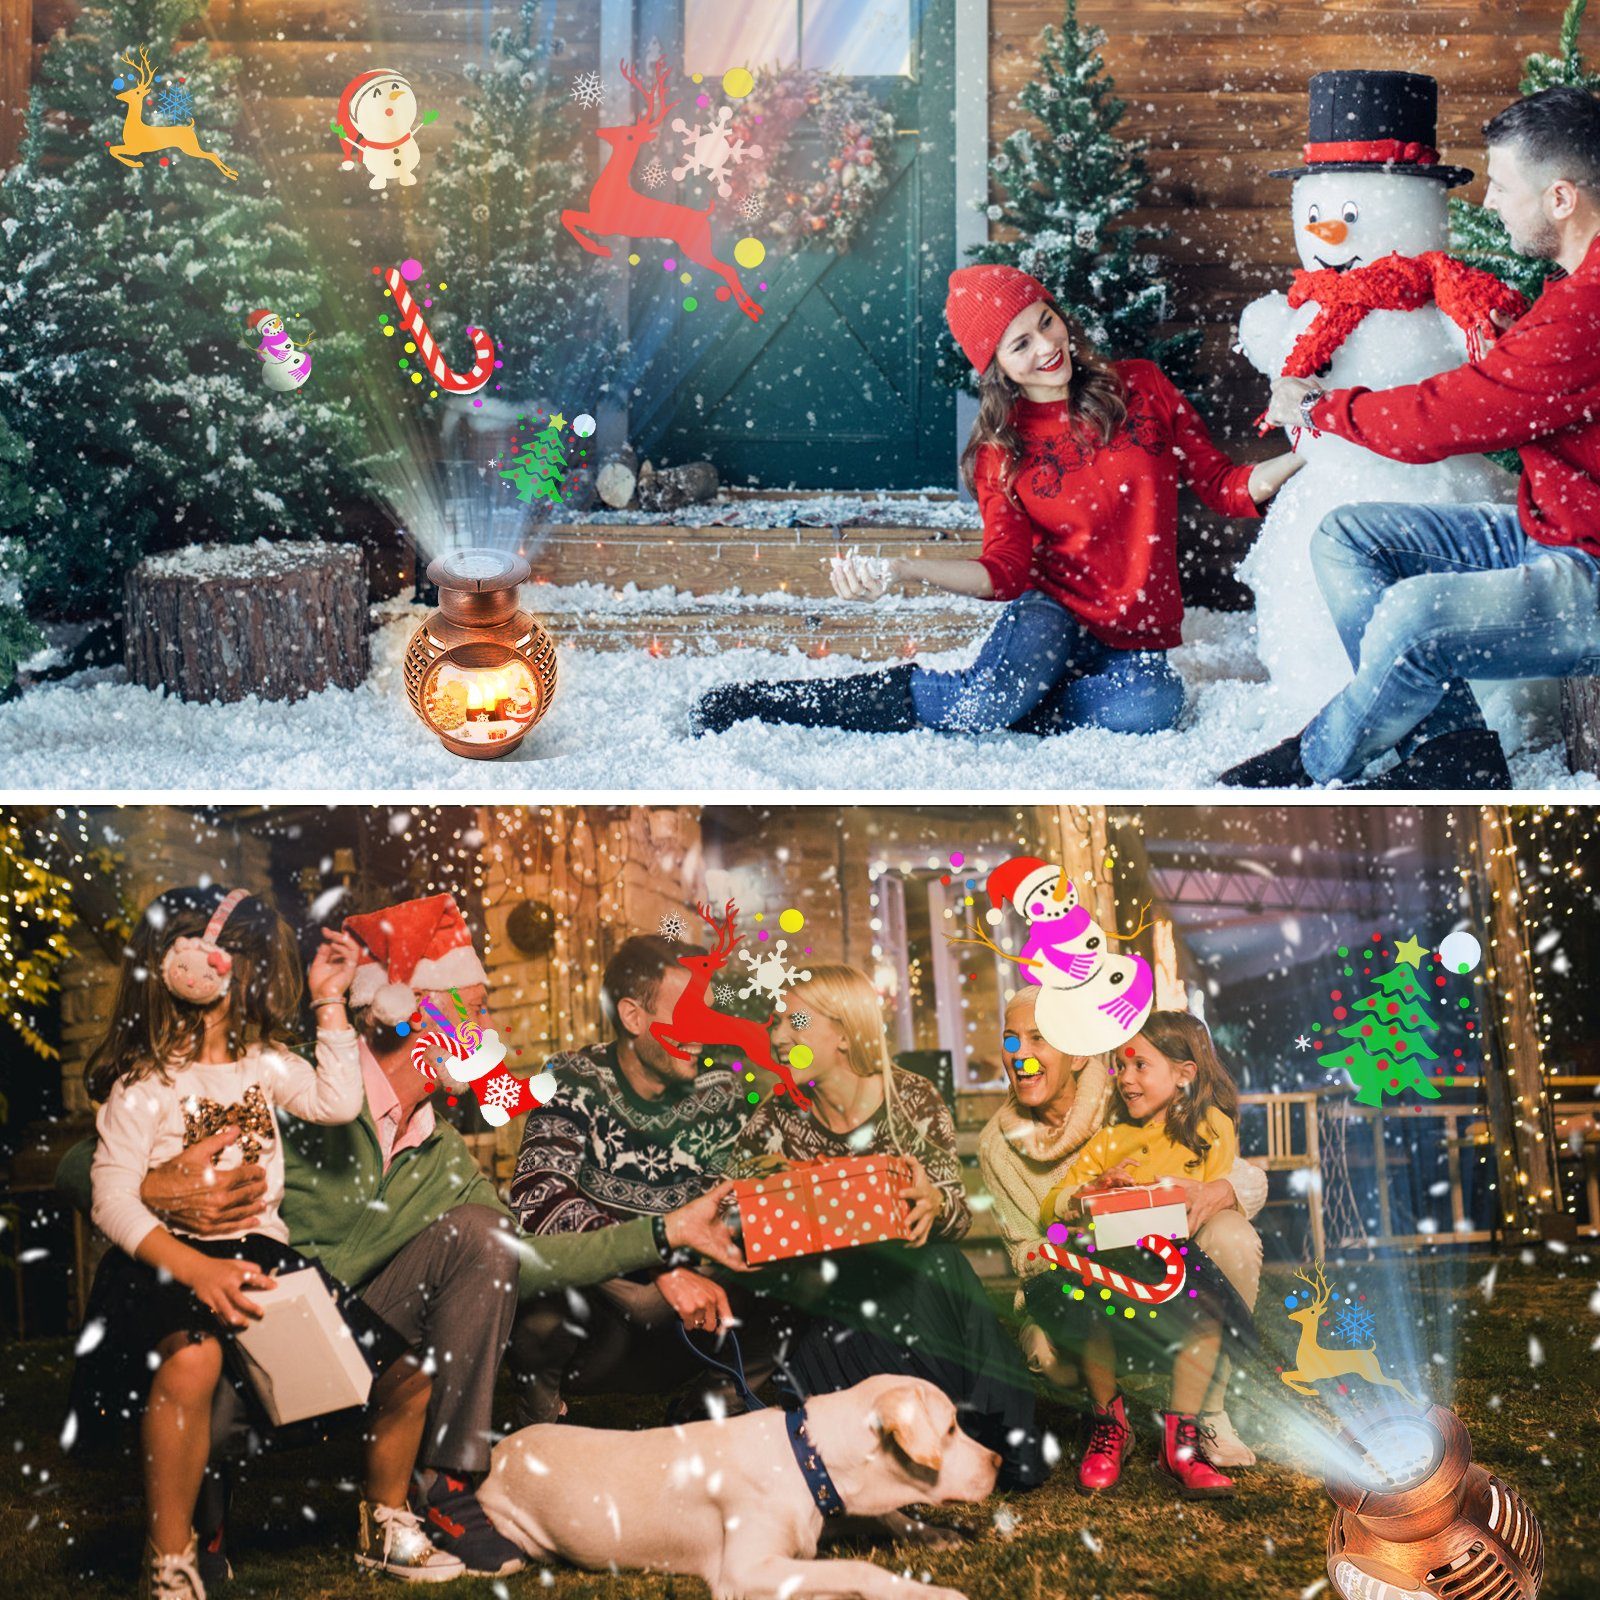 Flamme,6W, LED Weihnachtsdeko LED Dekolicht Projektor Projektionsfläche: Projektorlicht,16 Muster, weihnachtliche Weihnachtsdeko USB-Stecker/Batterie, Schütteldeko MUPOO 5-15, Laterne LED Projektionslampe